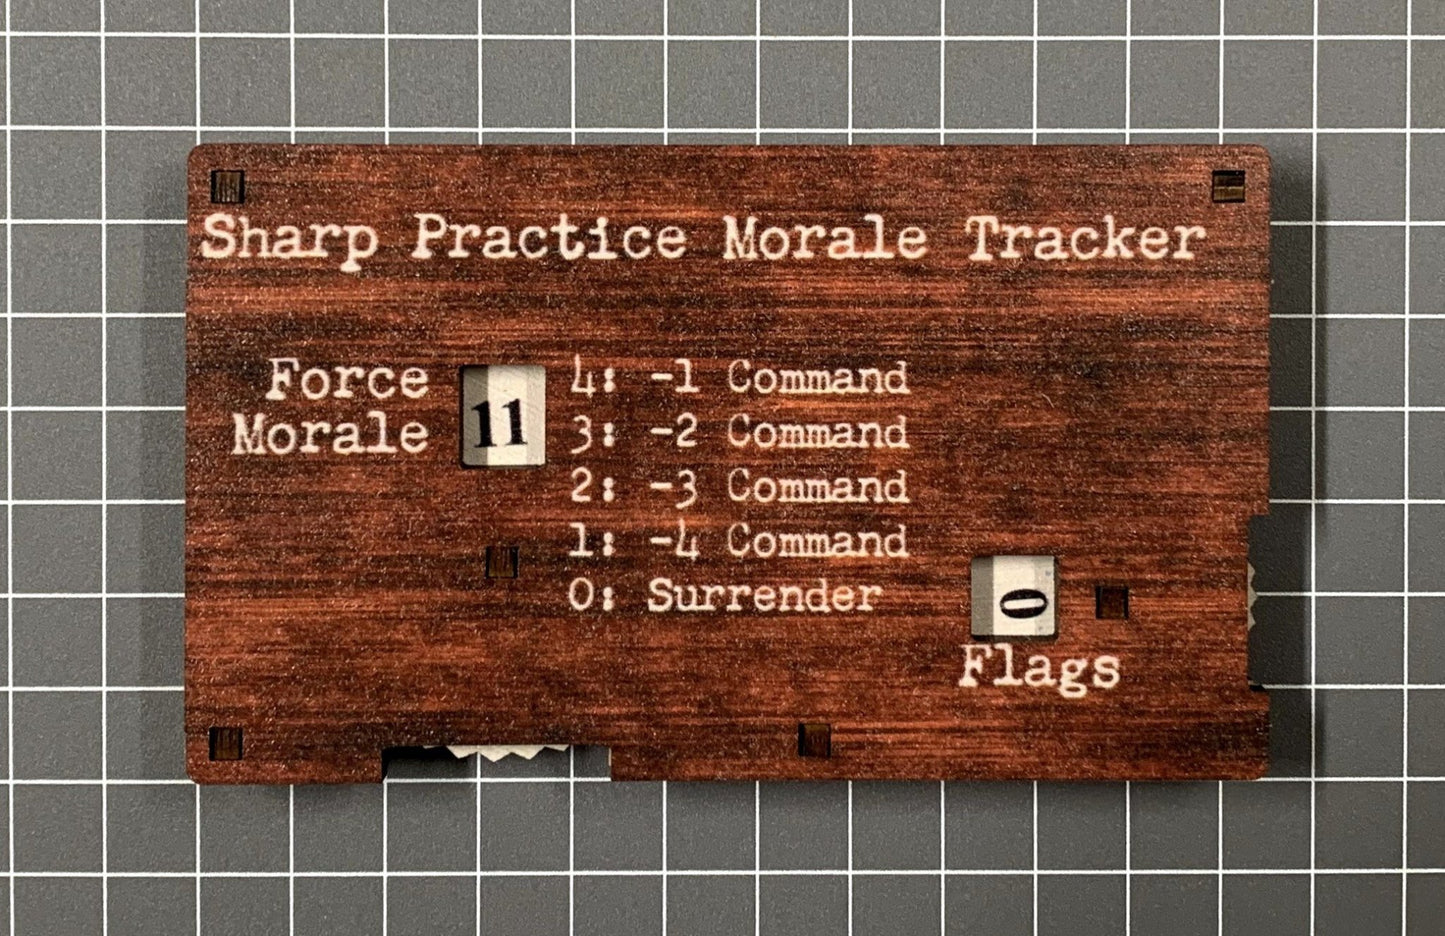 Force Morale Tracker (Sharp Practice) (TTR) - Battlefield Accessories